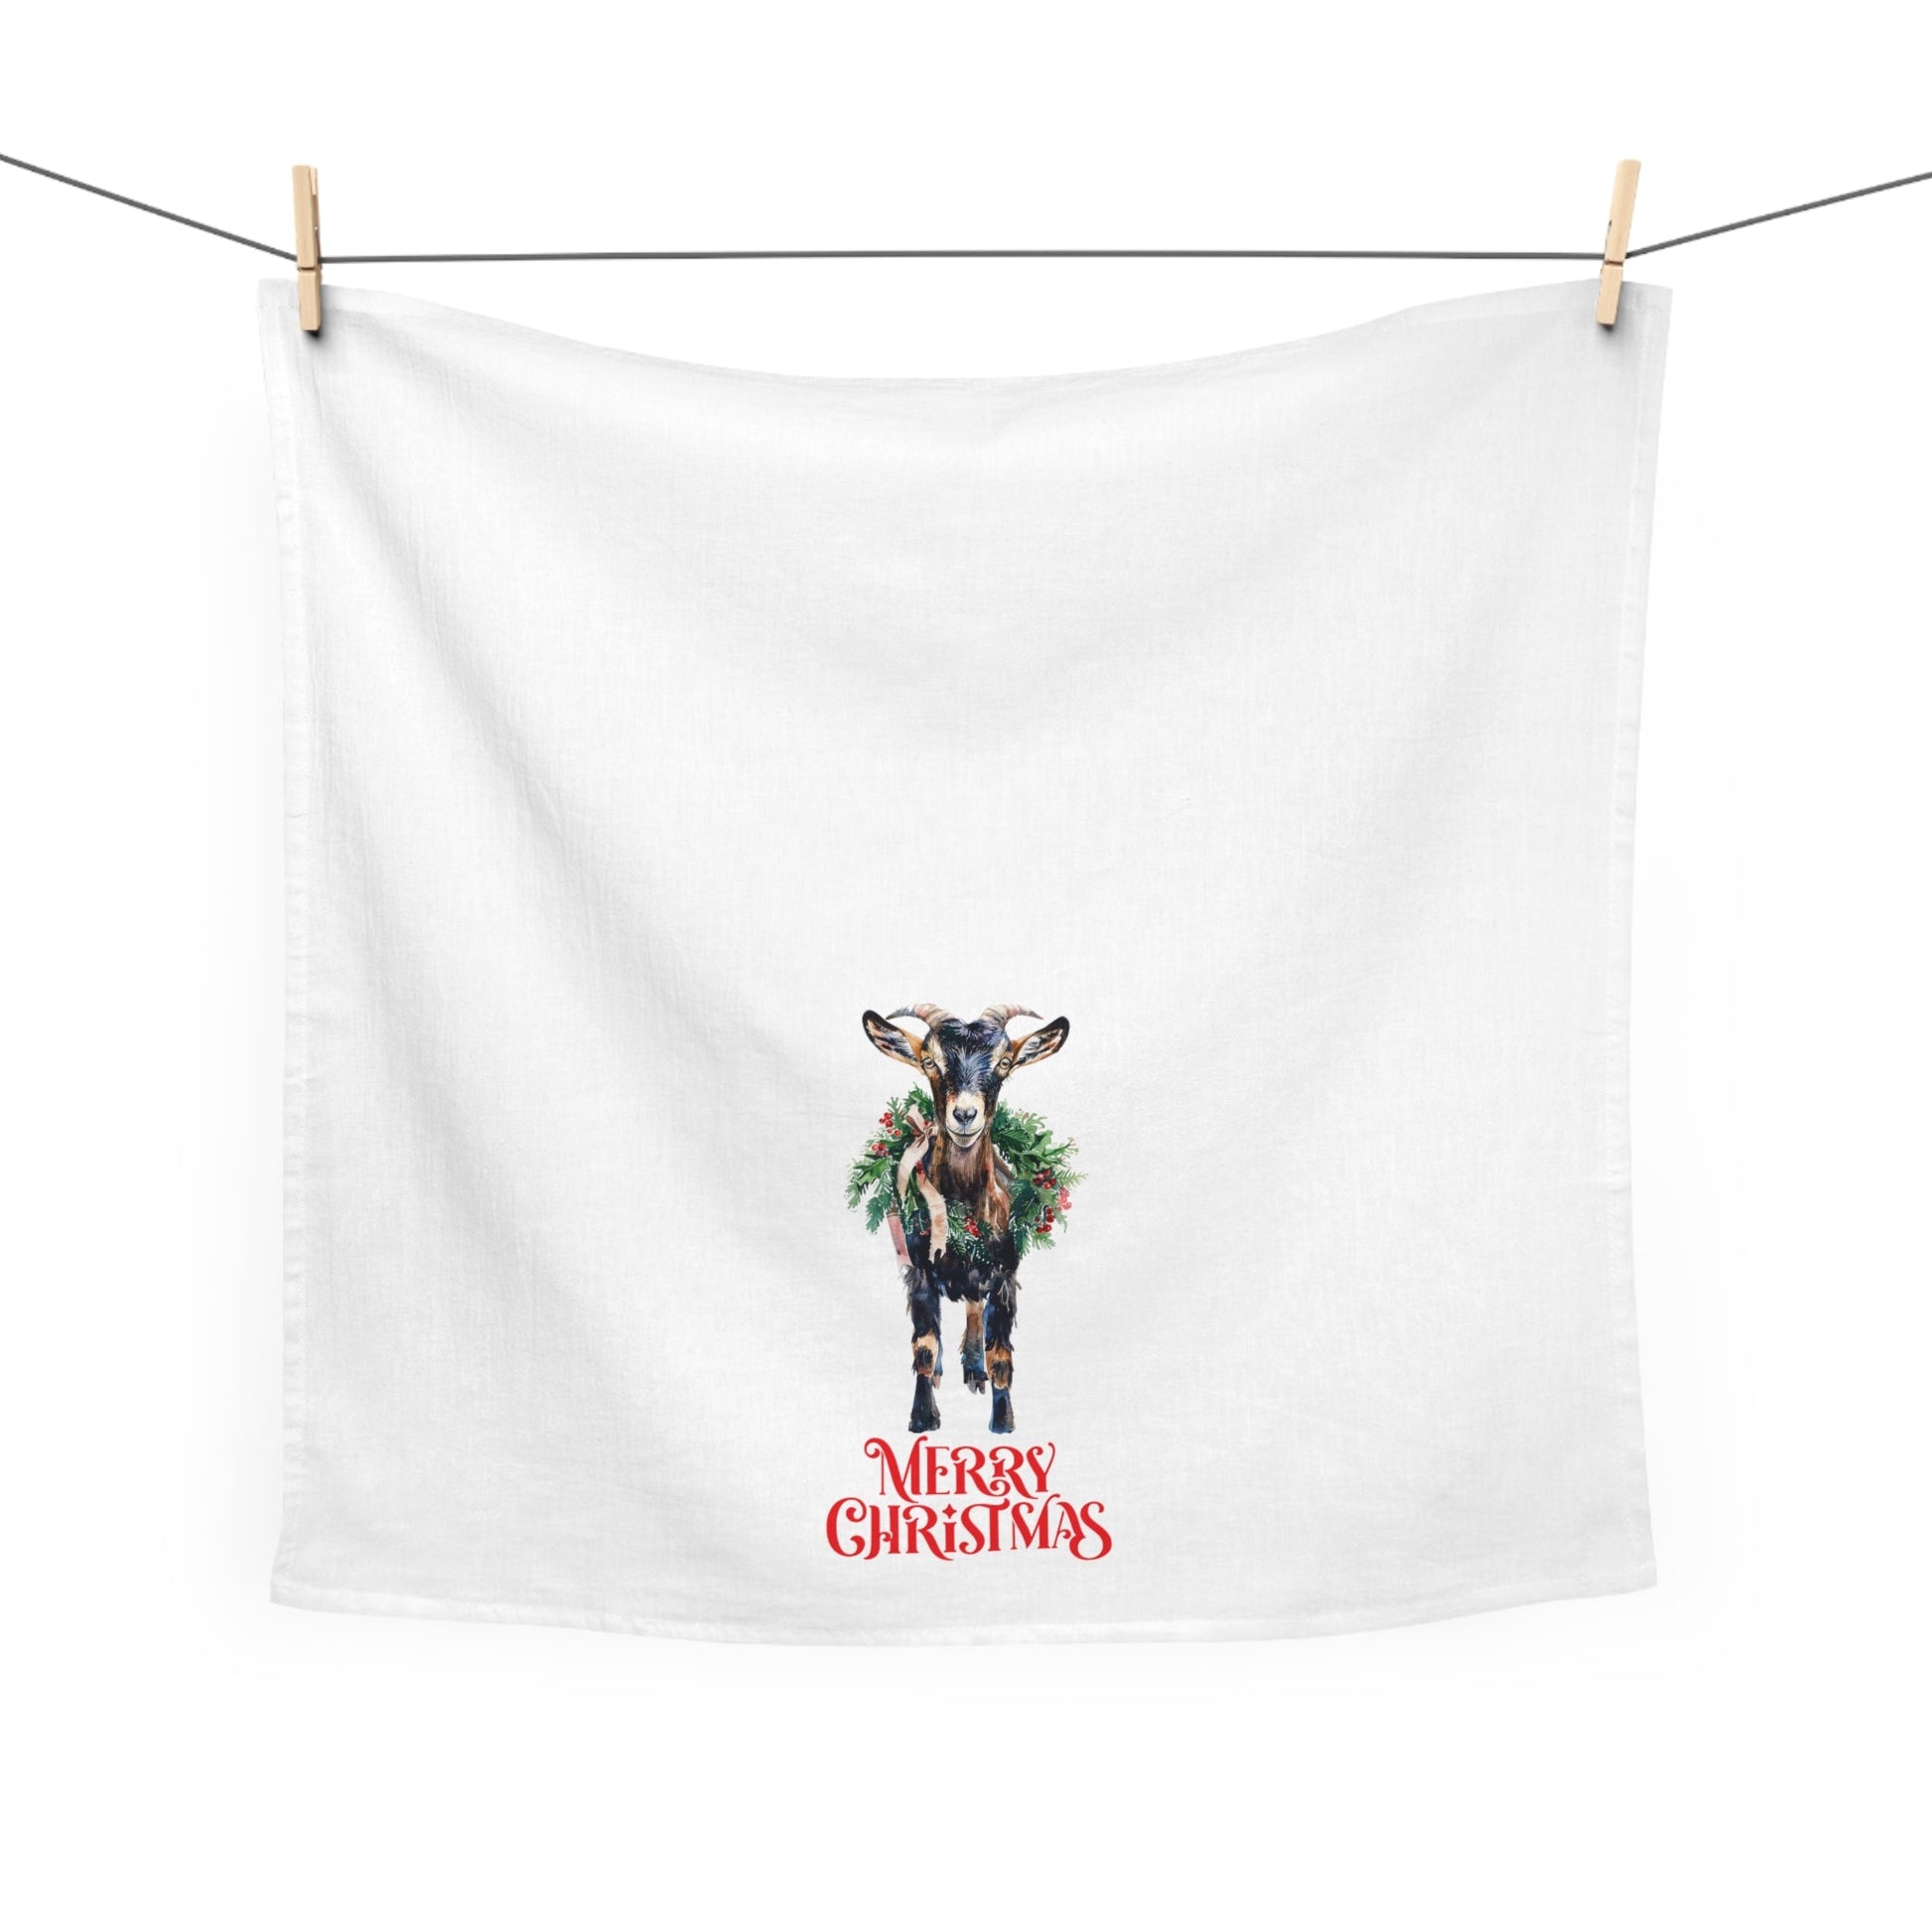 Chrismas Goat on Kitchen Tea Towel, Black & Tan Farm Goat Decor Gift - FlooredByArt